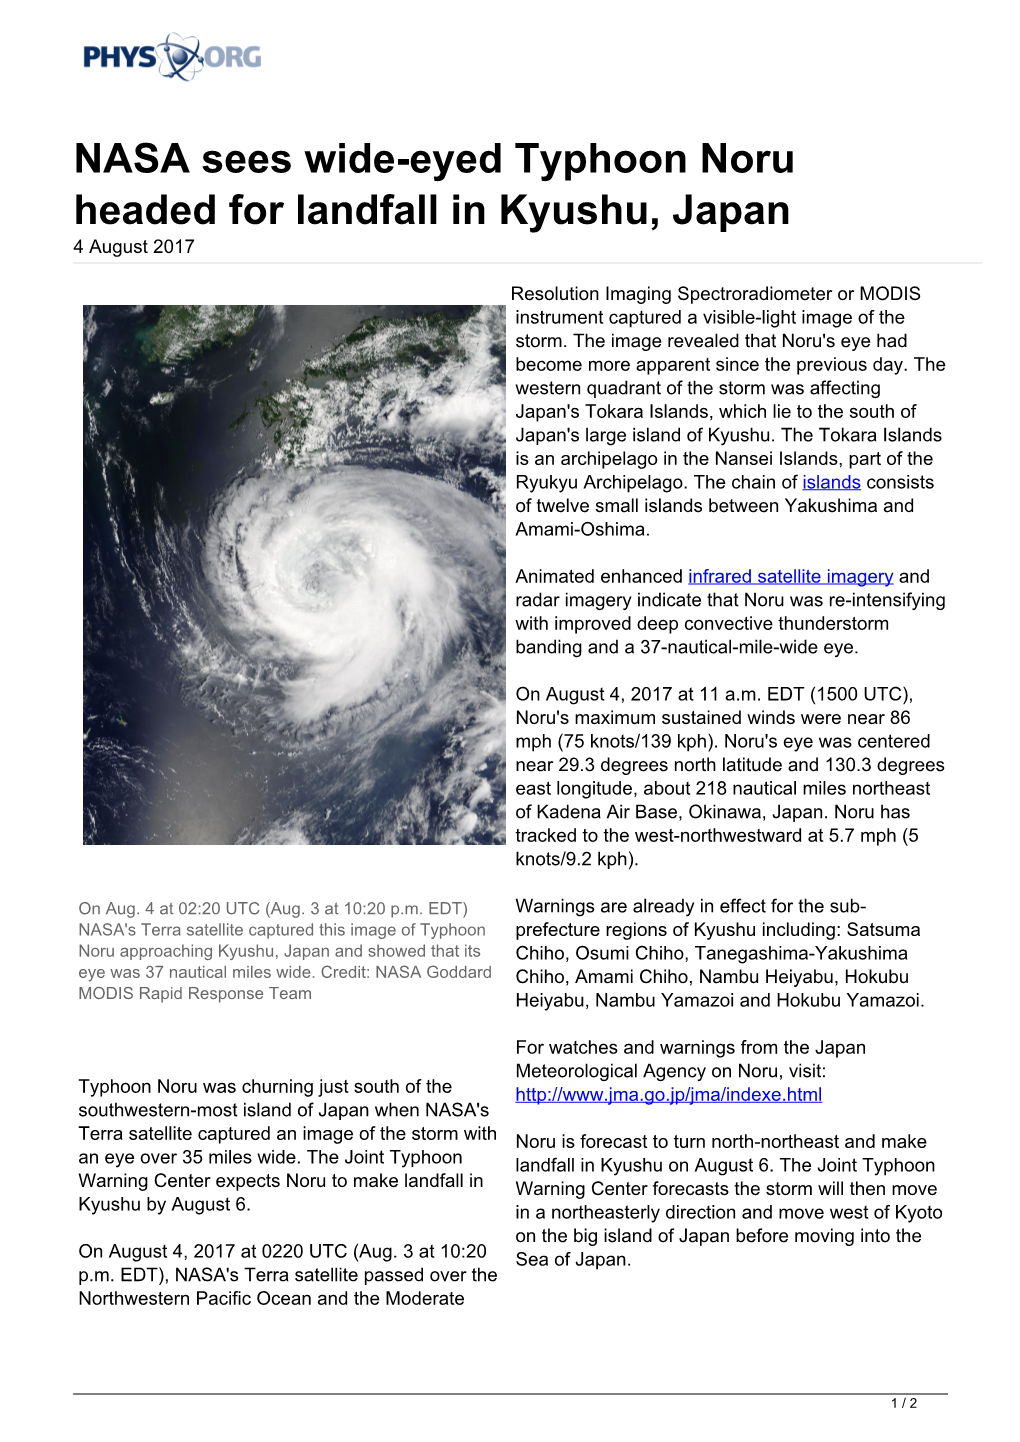 NASA Sees Wide-Eyed Typhoon Noru Headed for Landfall in Kyushu, Japan 4 August 2017